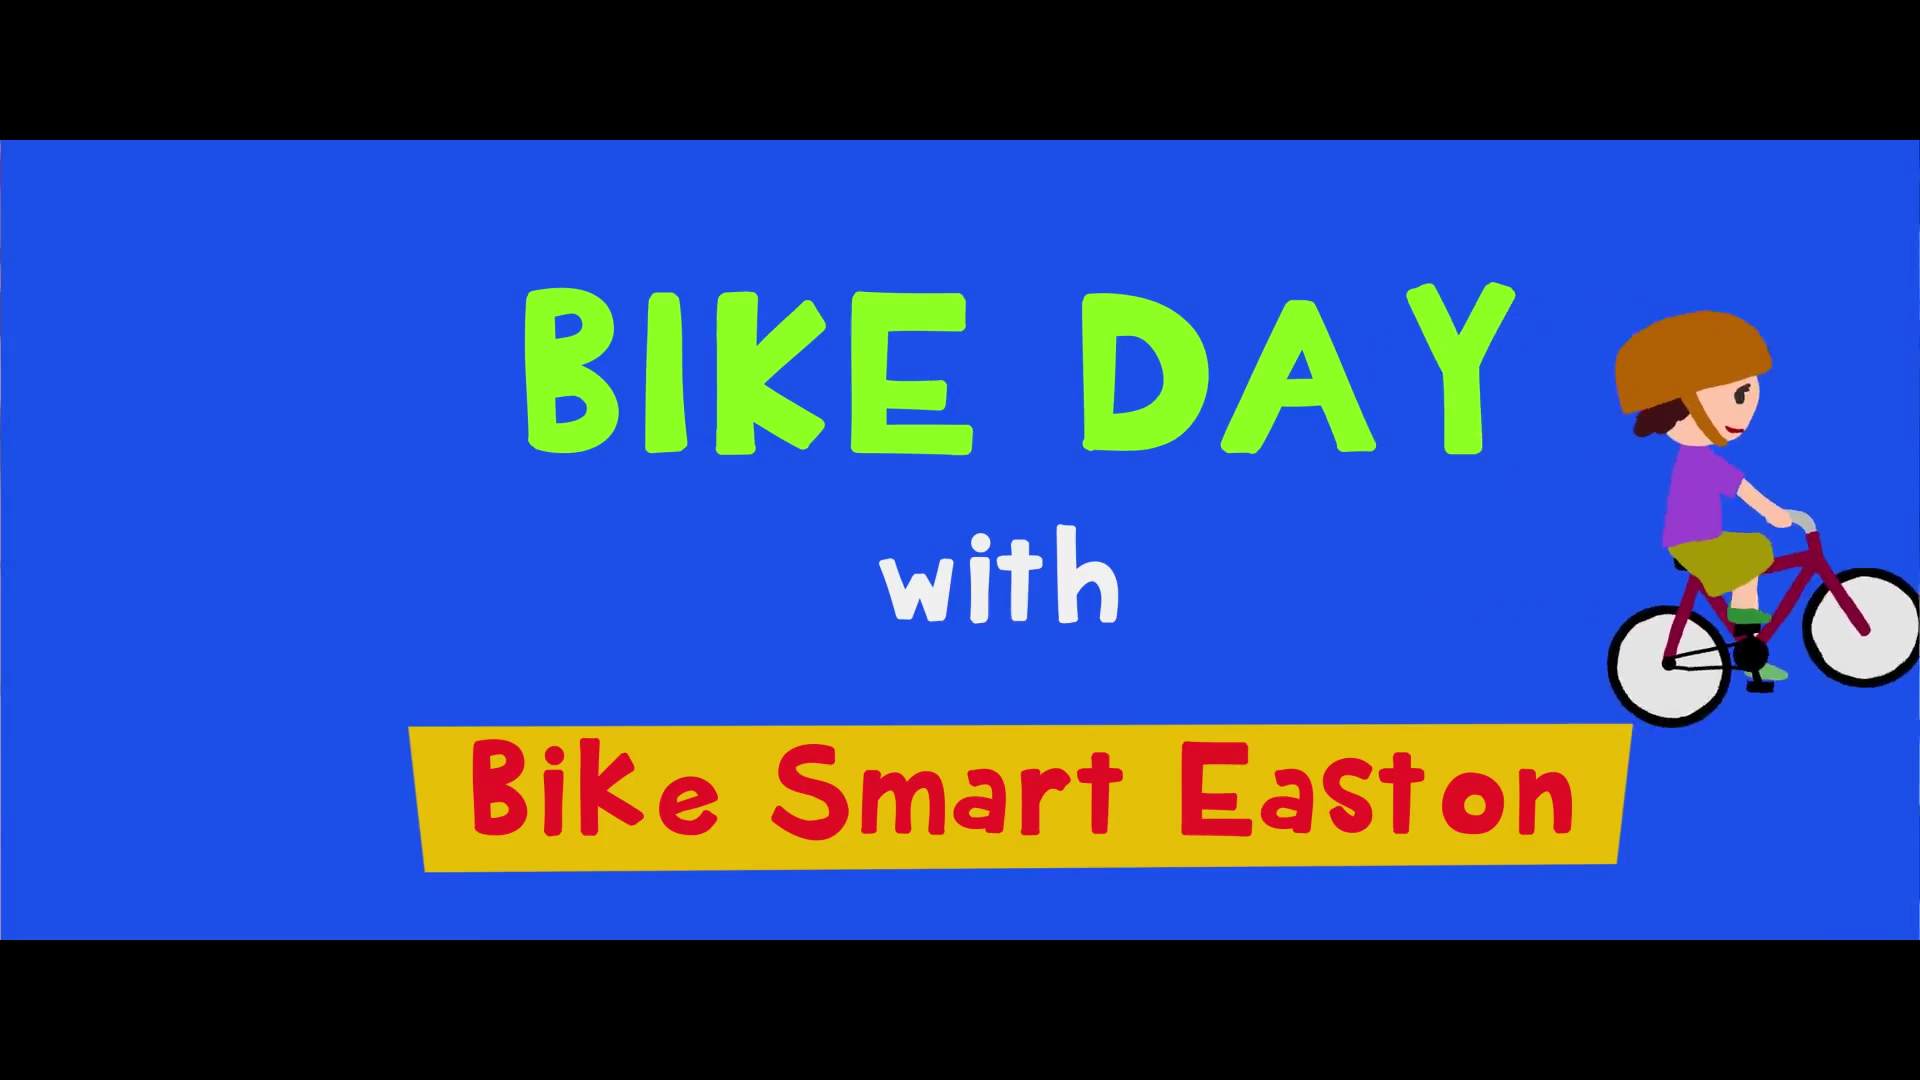 VIDEO: Bike Day in Easton